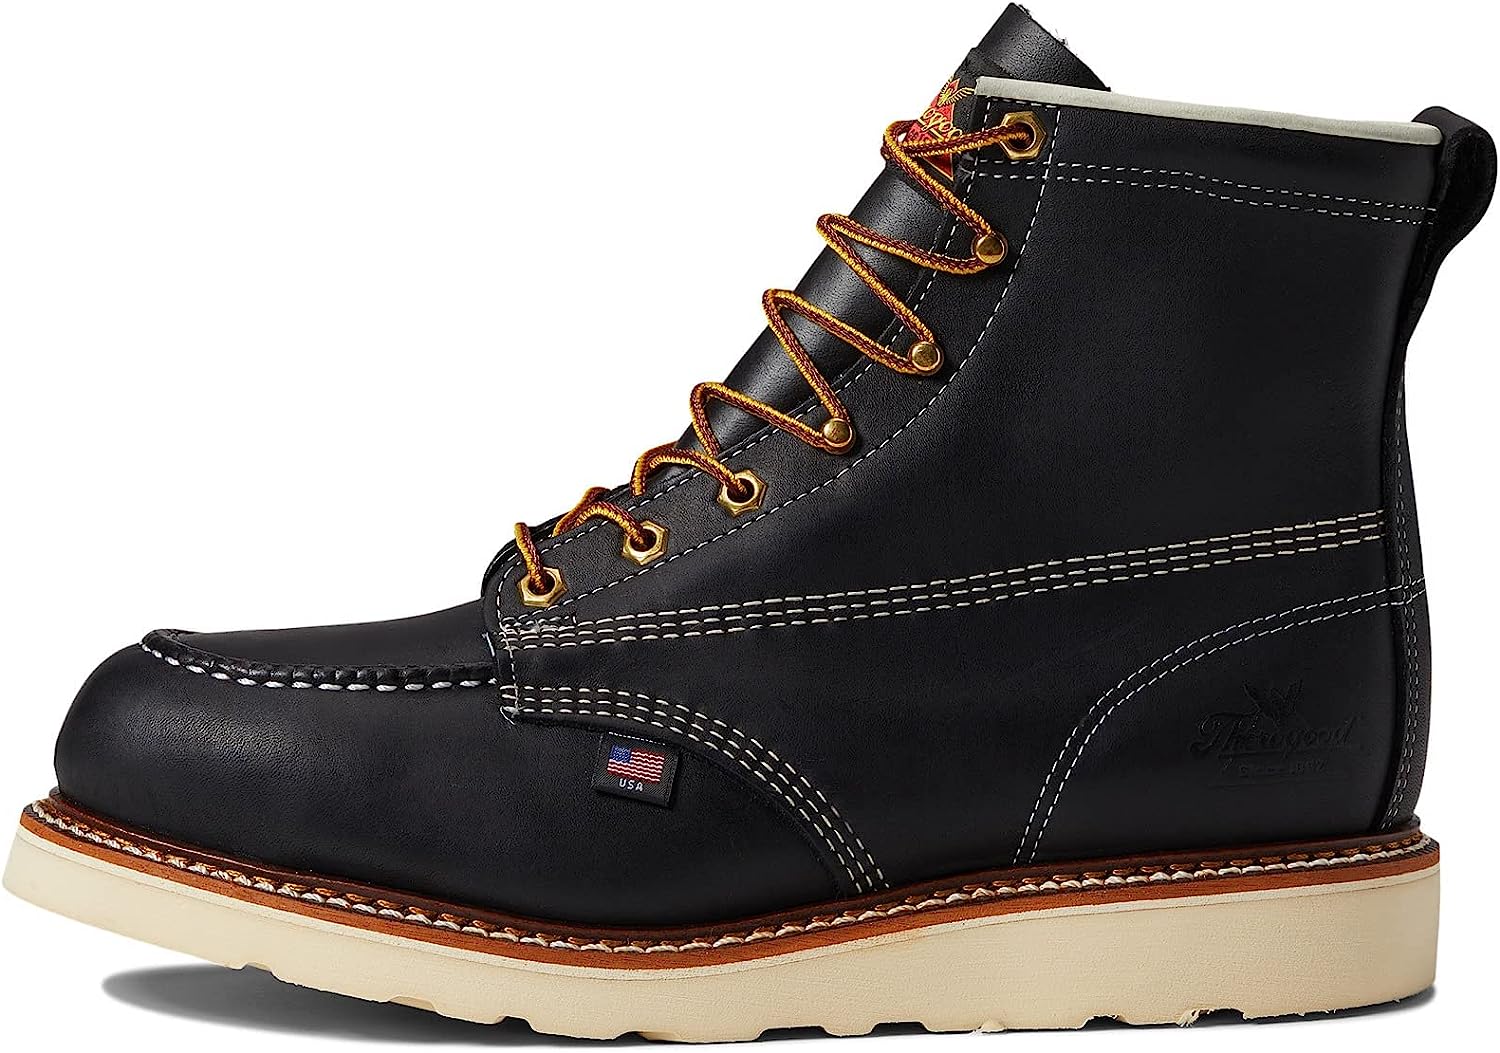 Thorogood American Heritage 6” Steel Toe Work Boots [...]